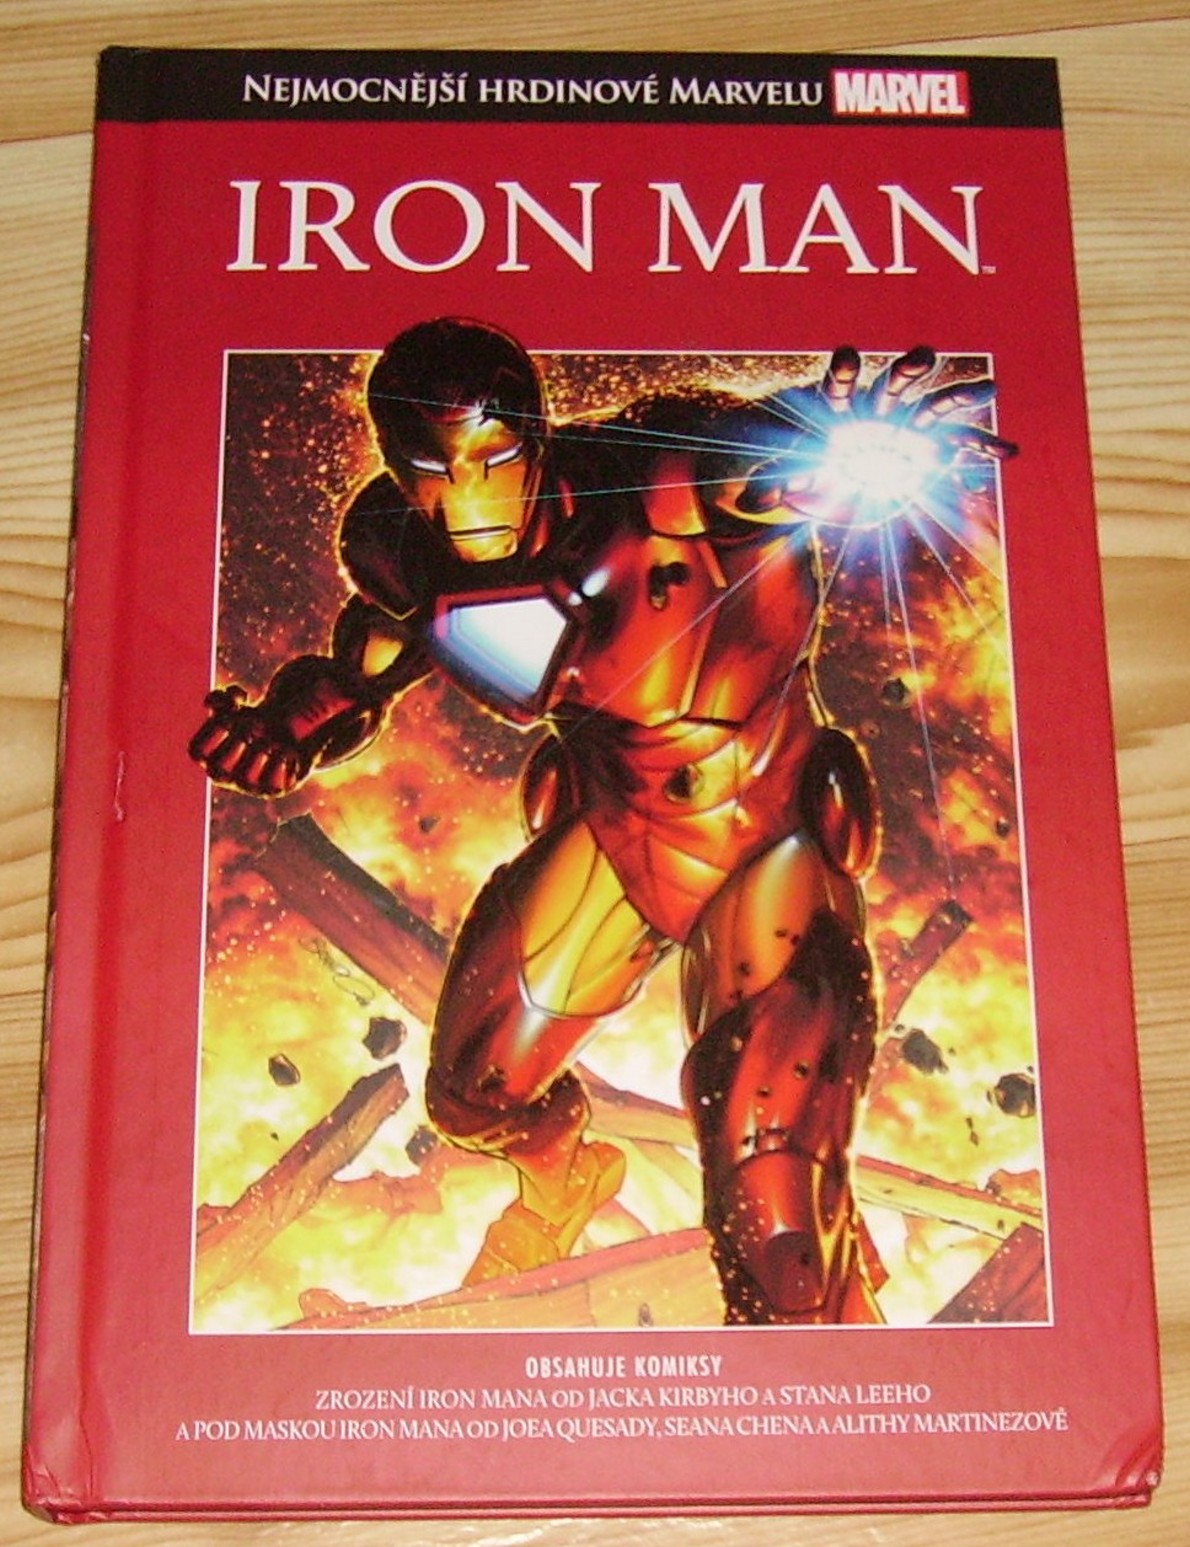 Iron Man (NHM 005)